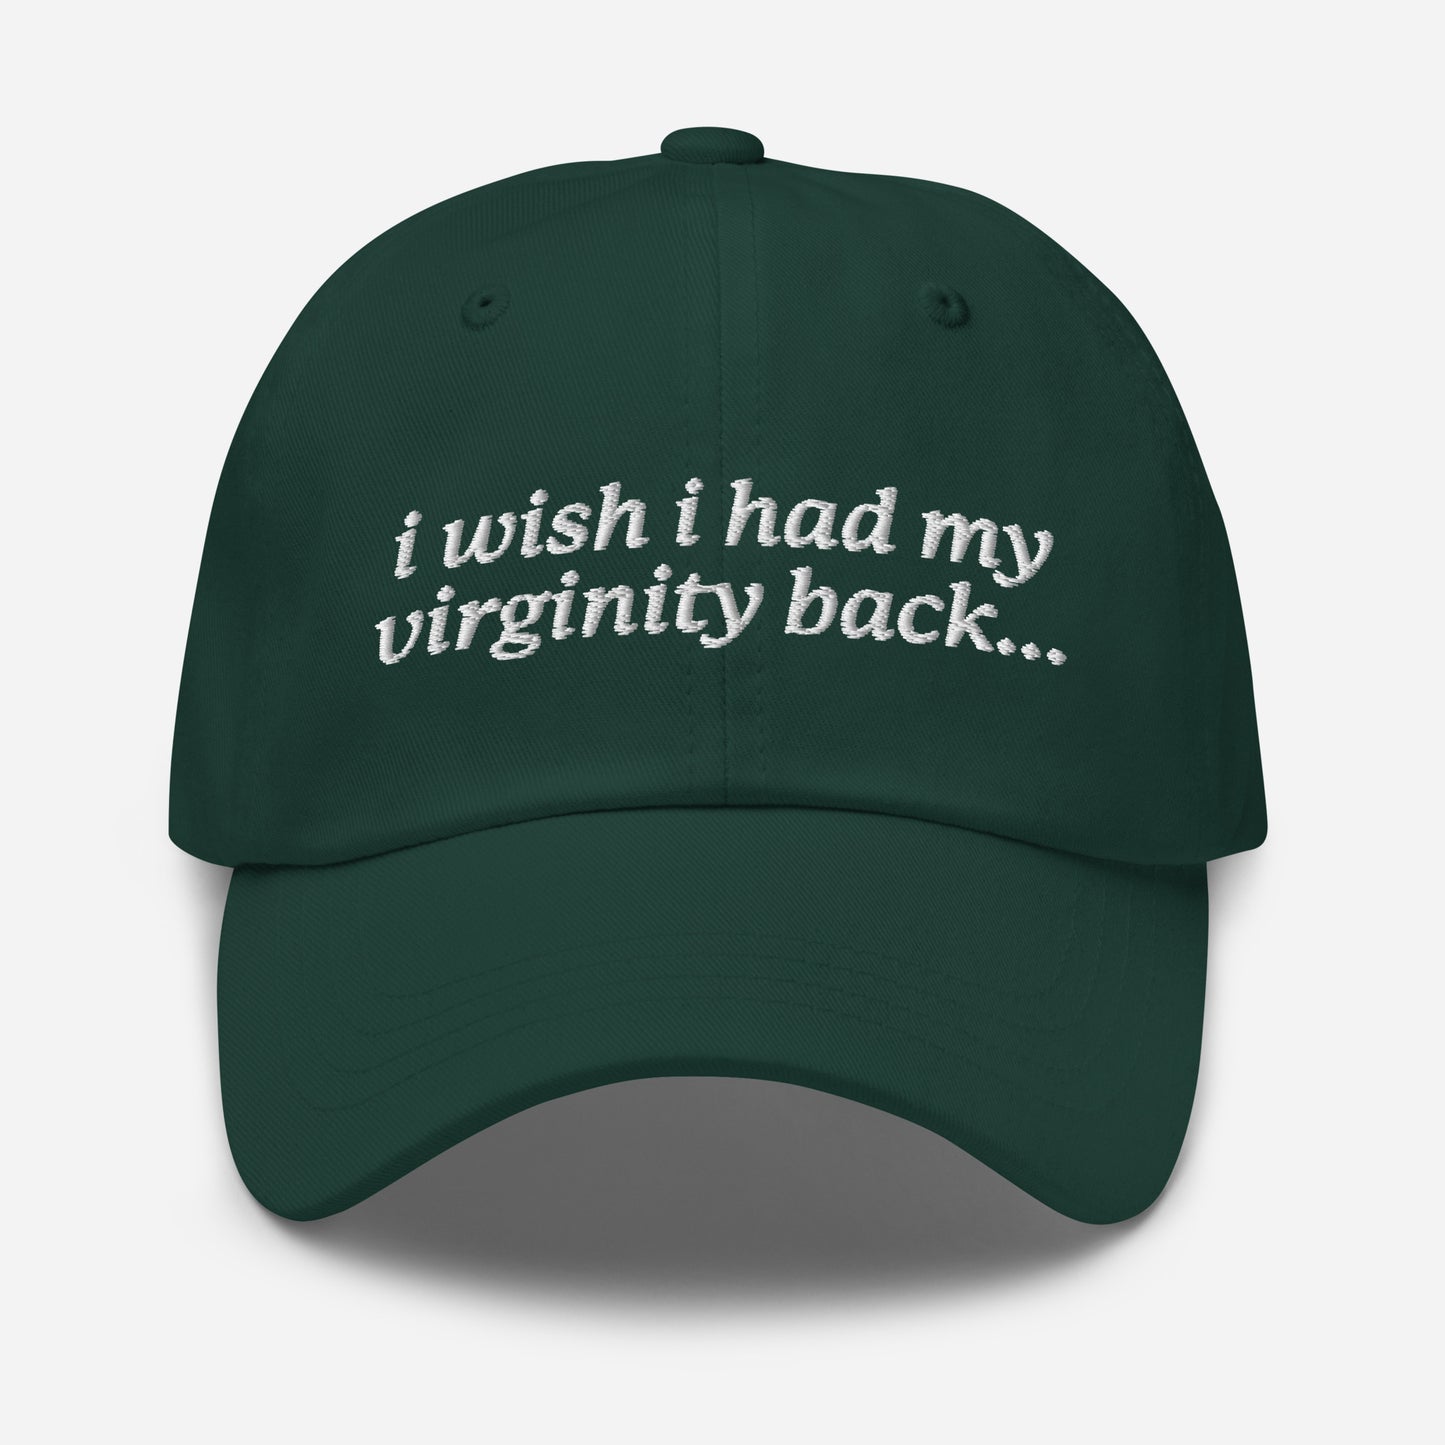 I Wish I Had My Virginity Back hat